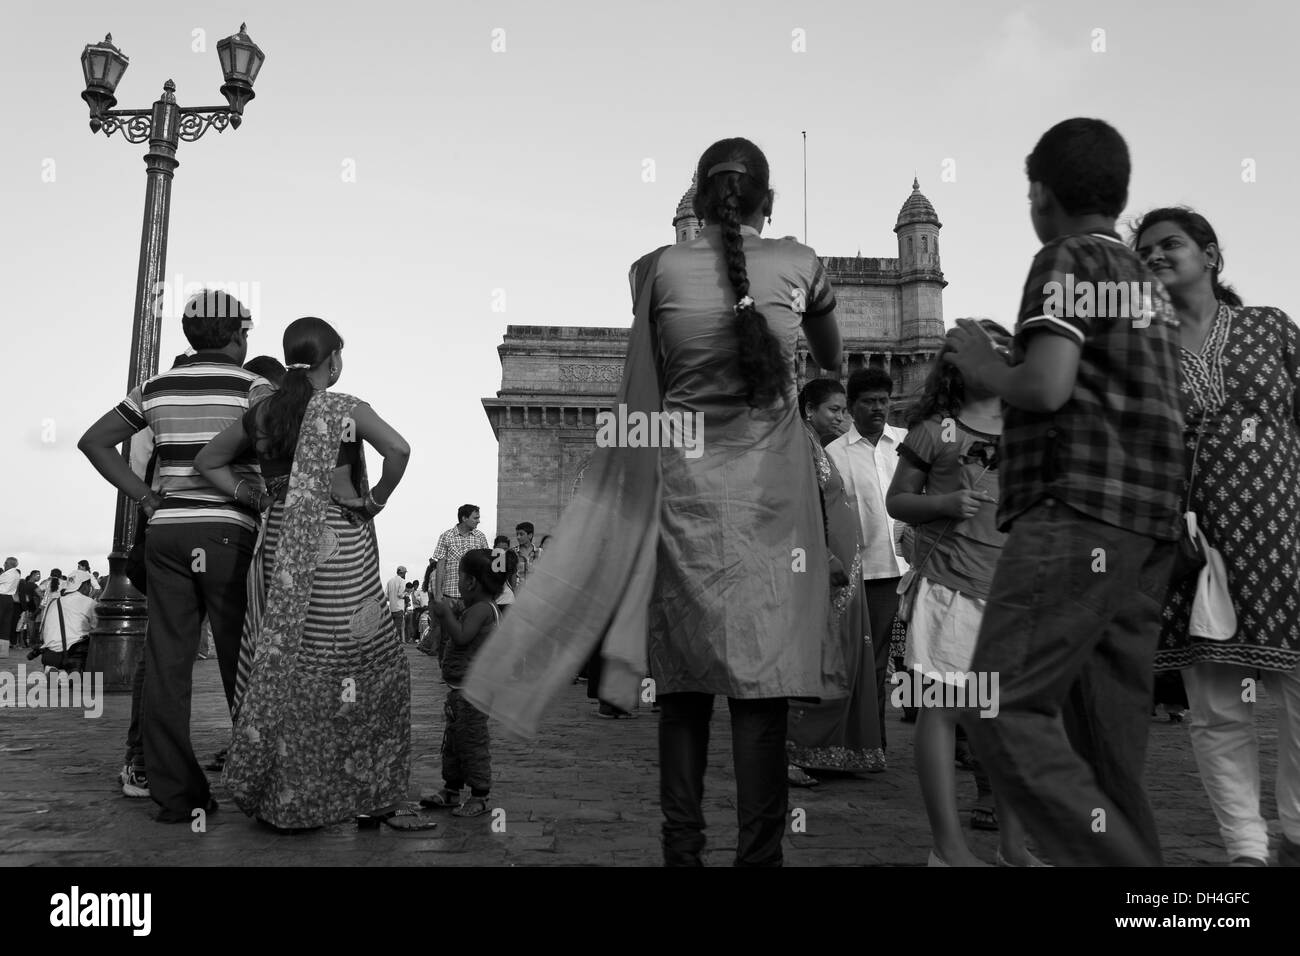 Menschen am Gateway of India Apollo Bunder Colaba Mumbai Maharashtra Indien Asia Juni 2012 Stockfoto